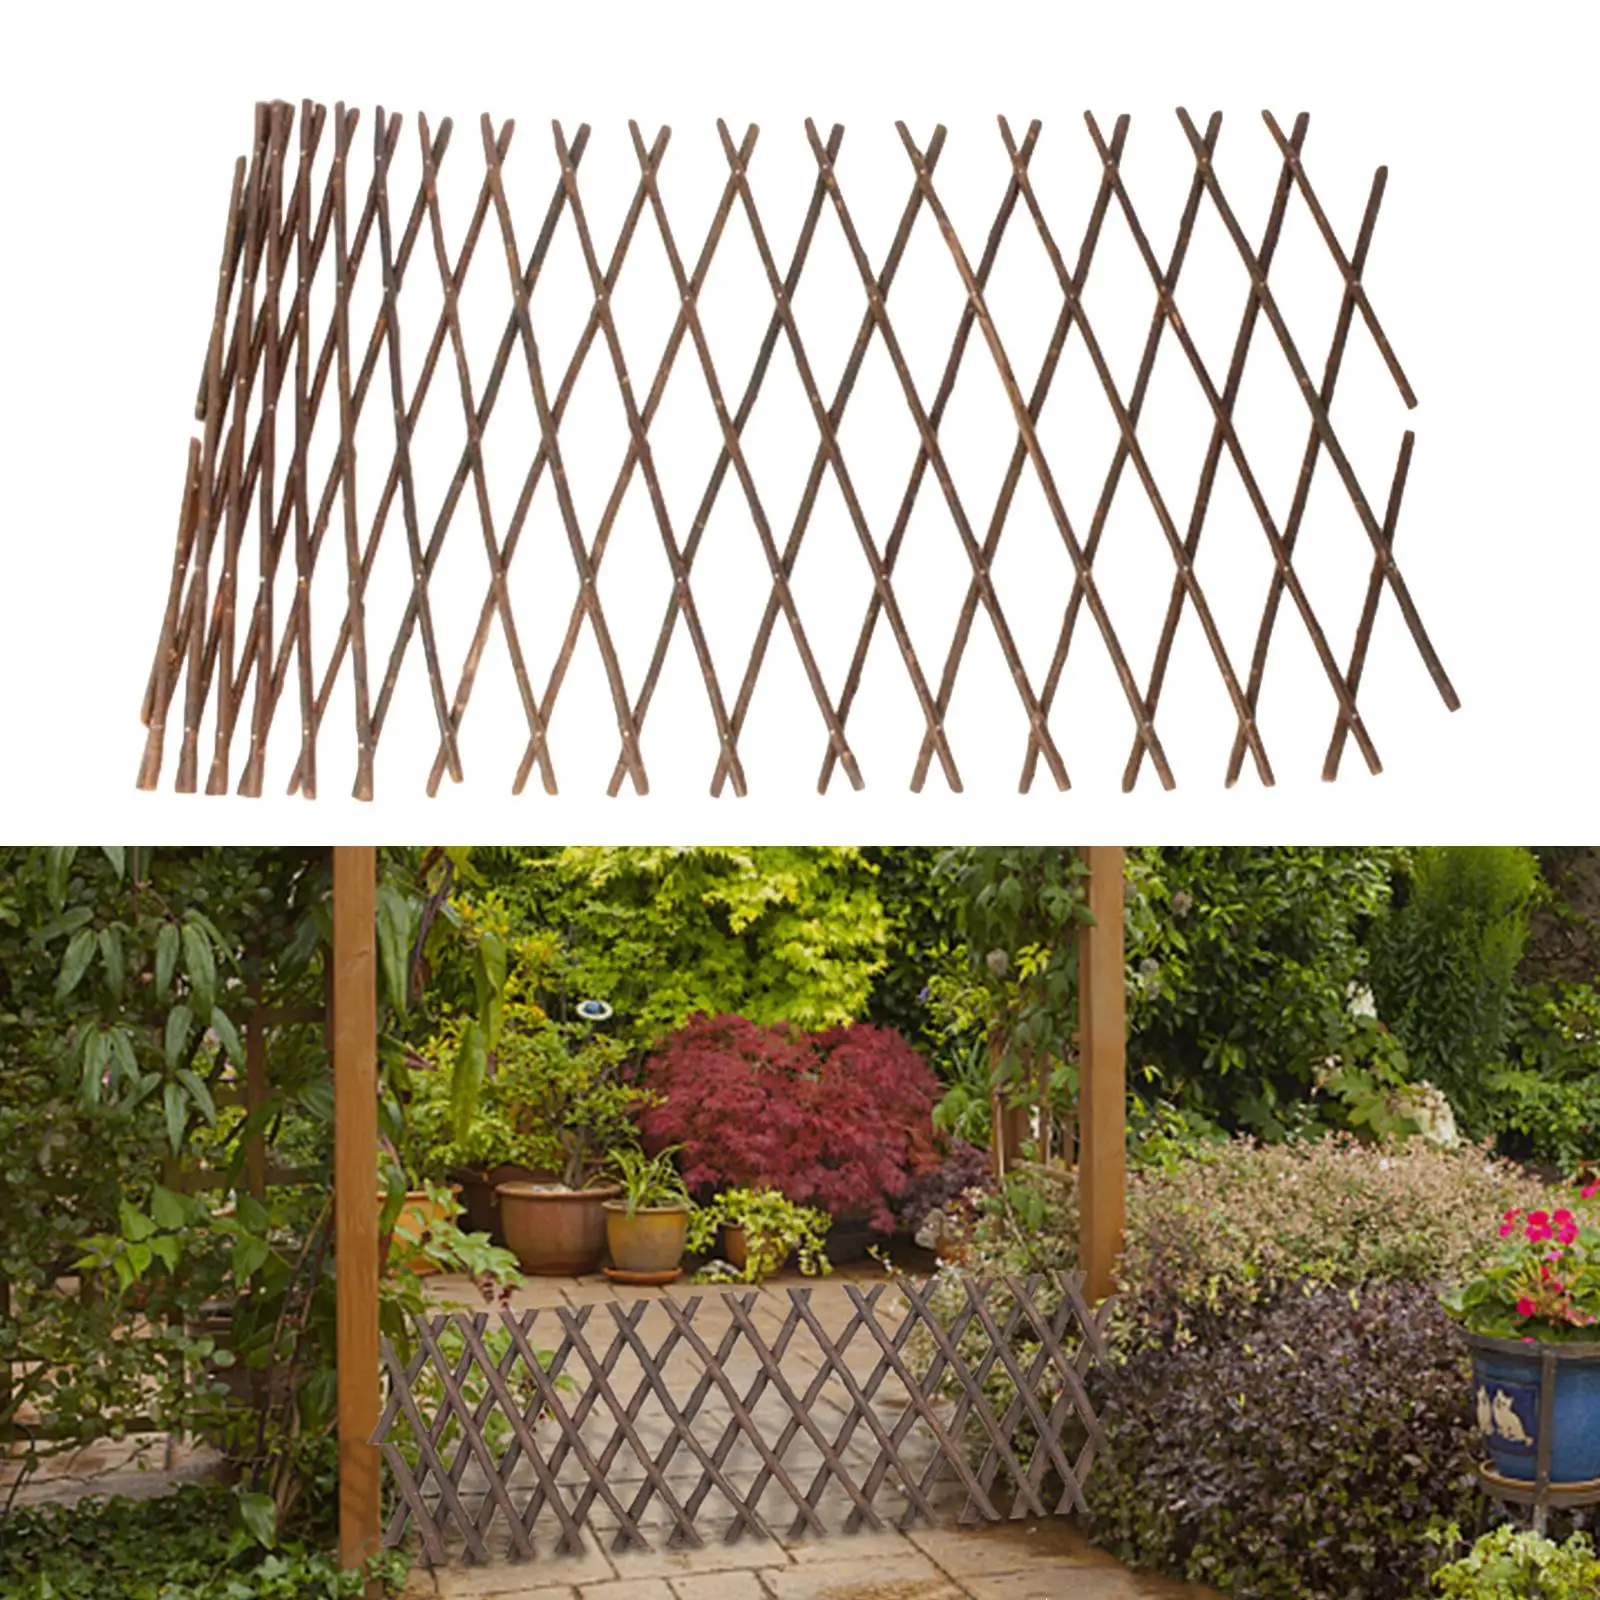 Retractable Garden Fence Trellis Adjustable Plant Climbing Support Lattice Panel Screen for Outdoor Indoor Decoration